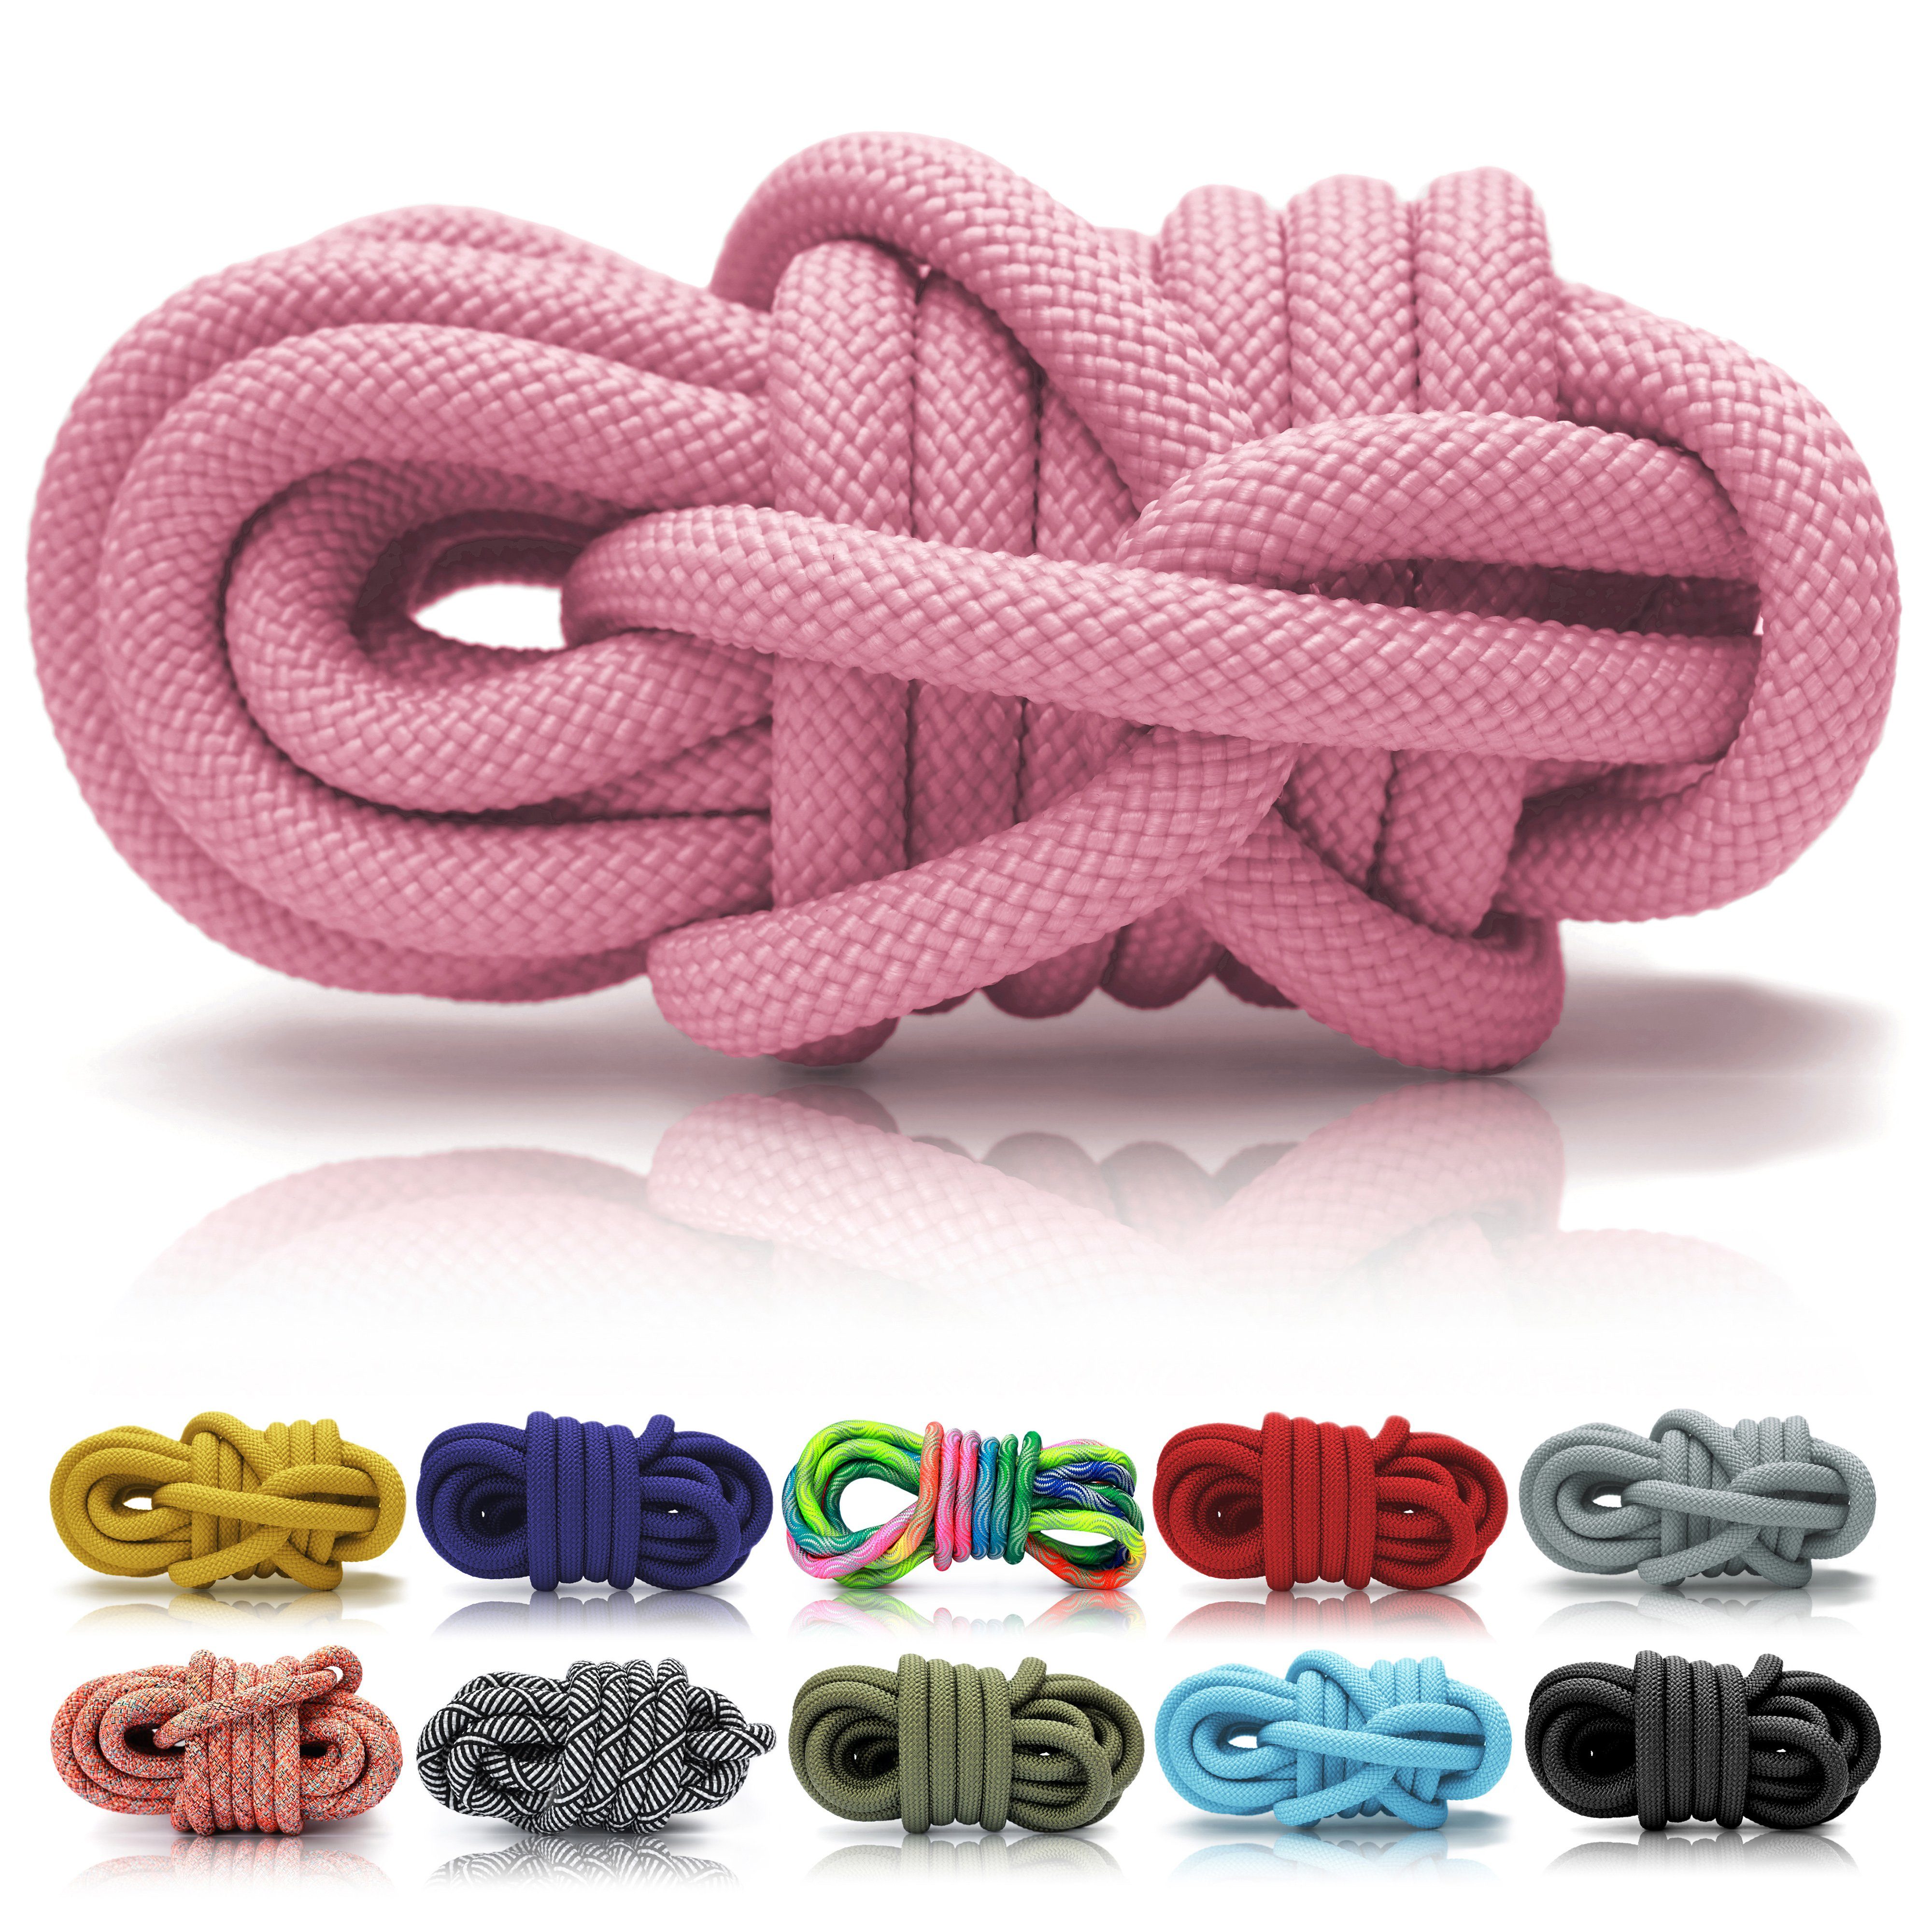 Ganzoo PPM Seil 5 Meter, Tauseil, Hunde-Leine, Halsband, Takeln,10mm,Pinkrosa Reepschnur